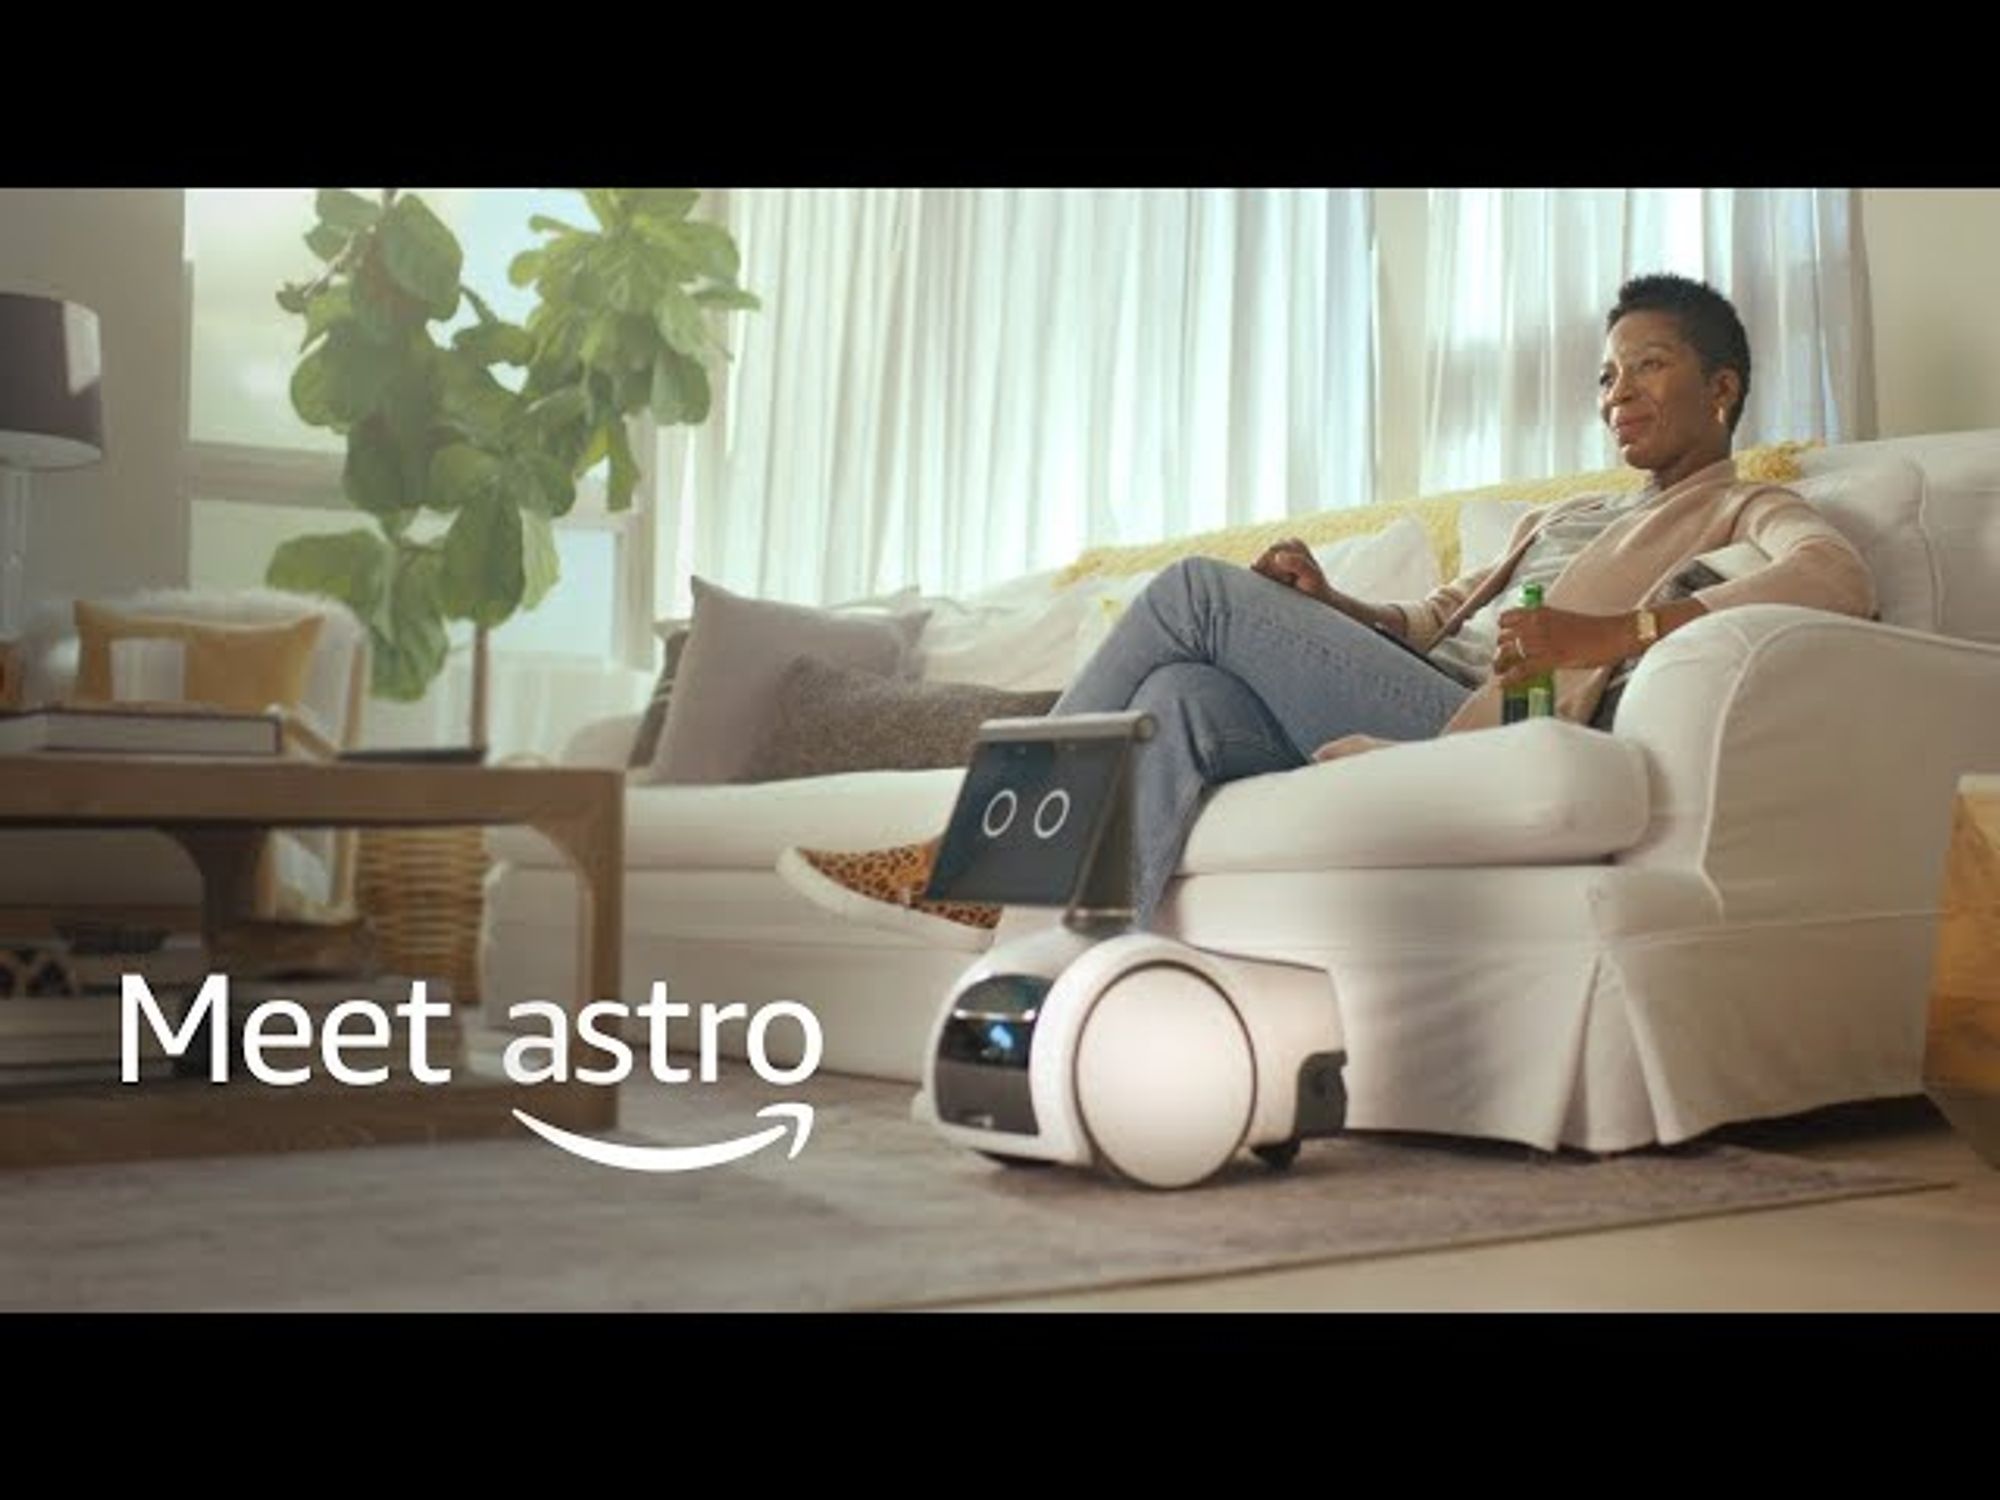 Amazon unveils Astro, an Alexa-enabled home robot on wheels - P